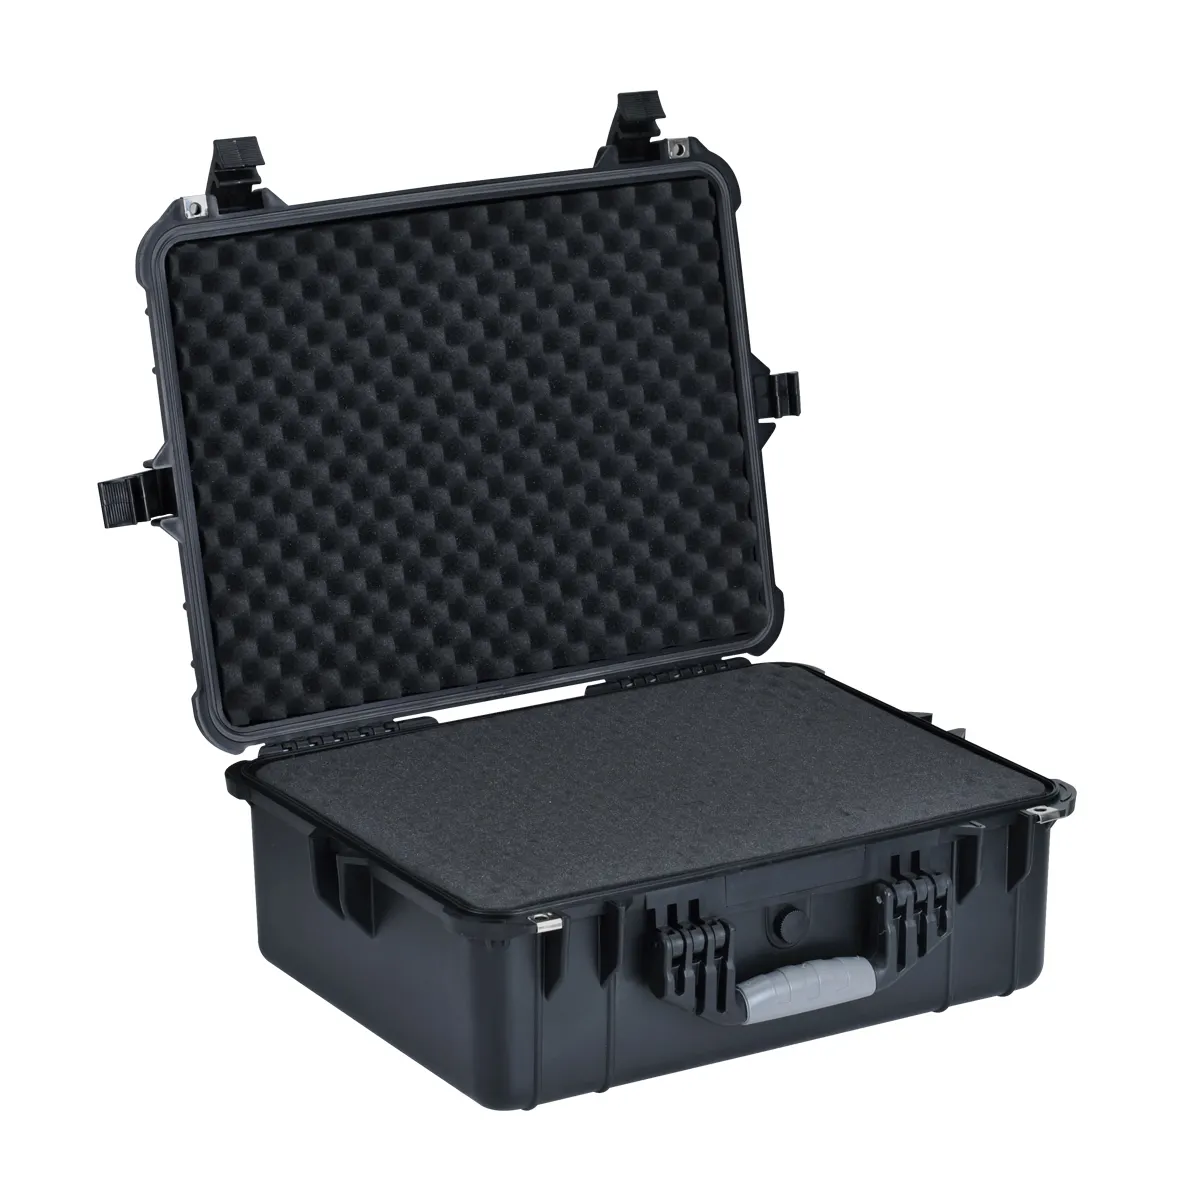 OEM black plastic tool box waterproof case with handle plastic storage case for electronics equipment